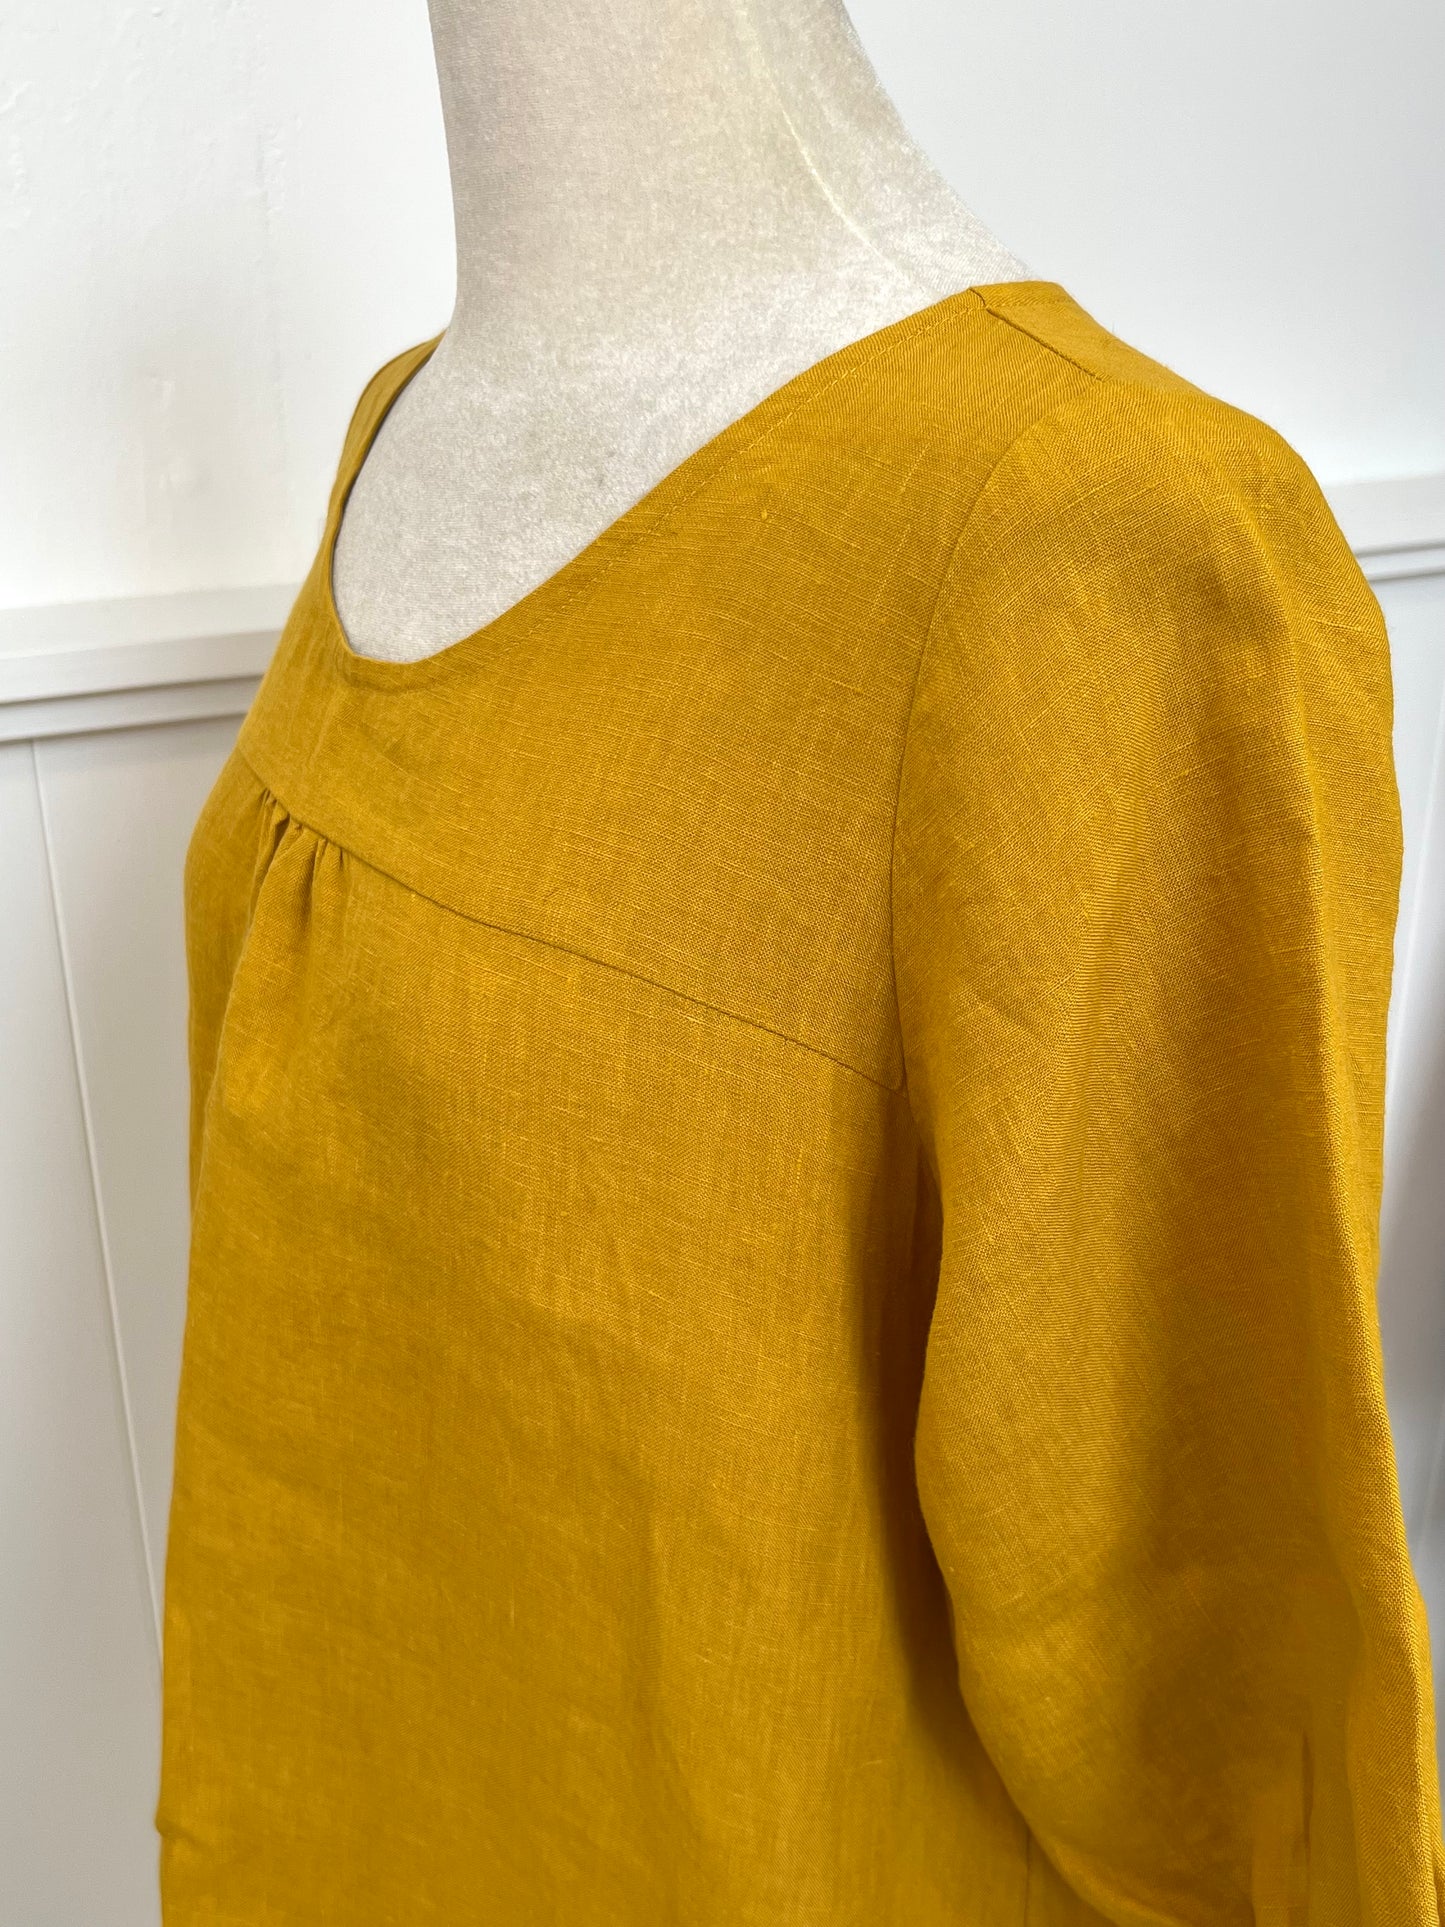 "Phoebe" Dress - Marigold Linen